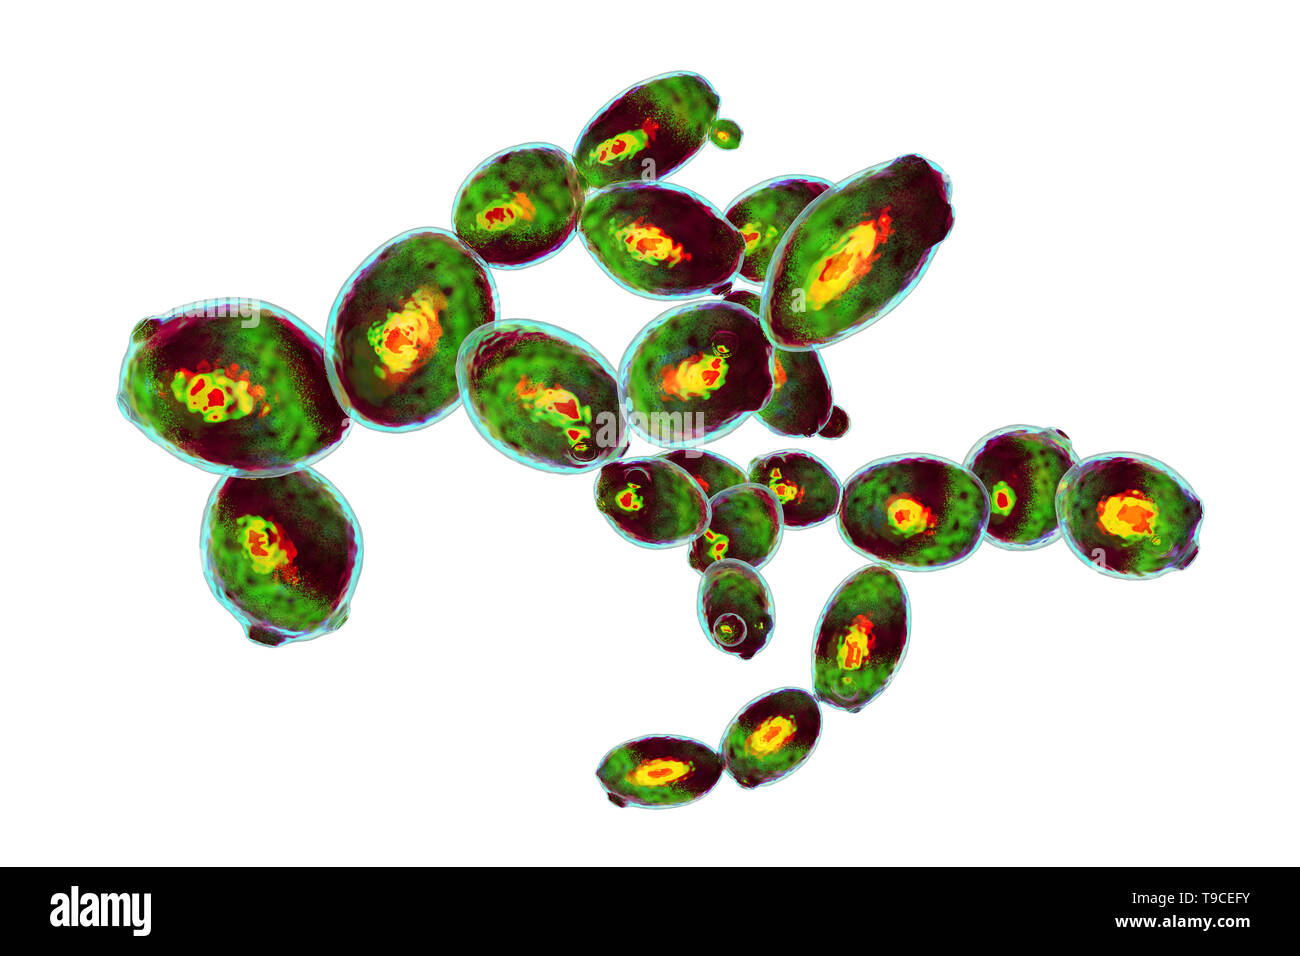 Saccharomyces cerevisiae yeast, illustration Stock Photo